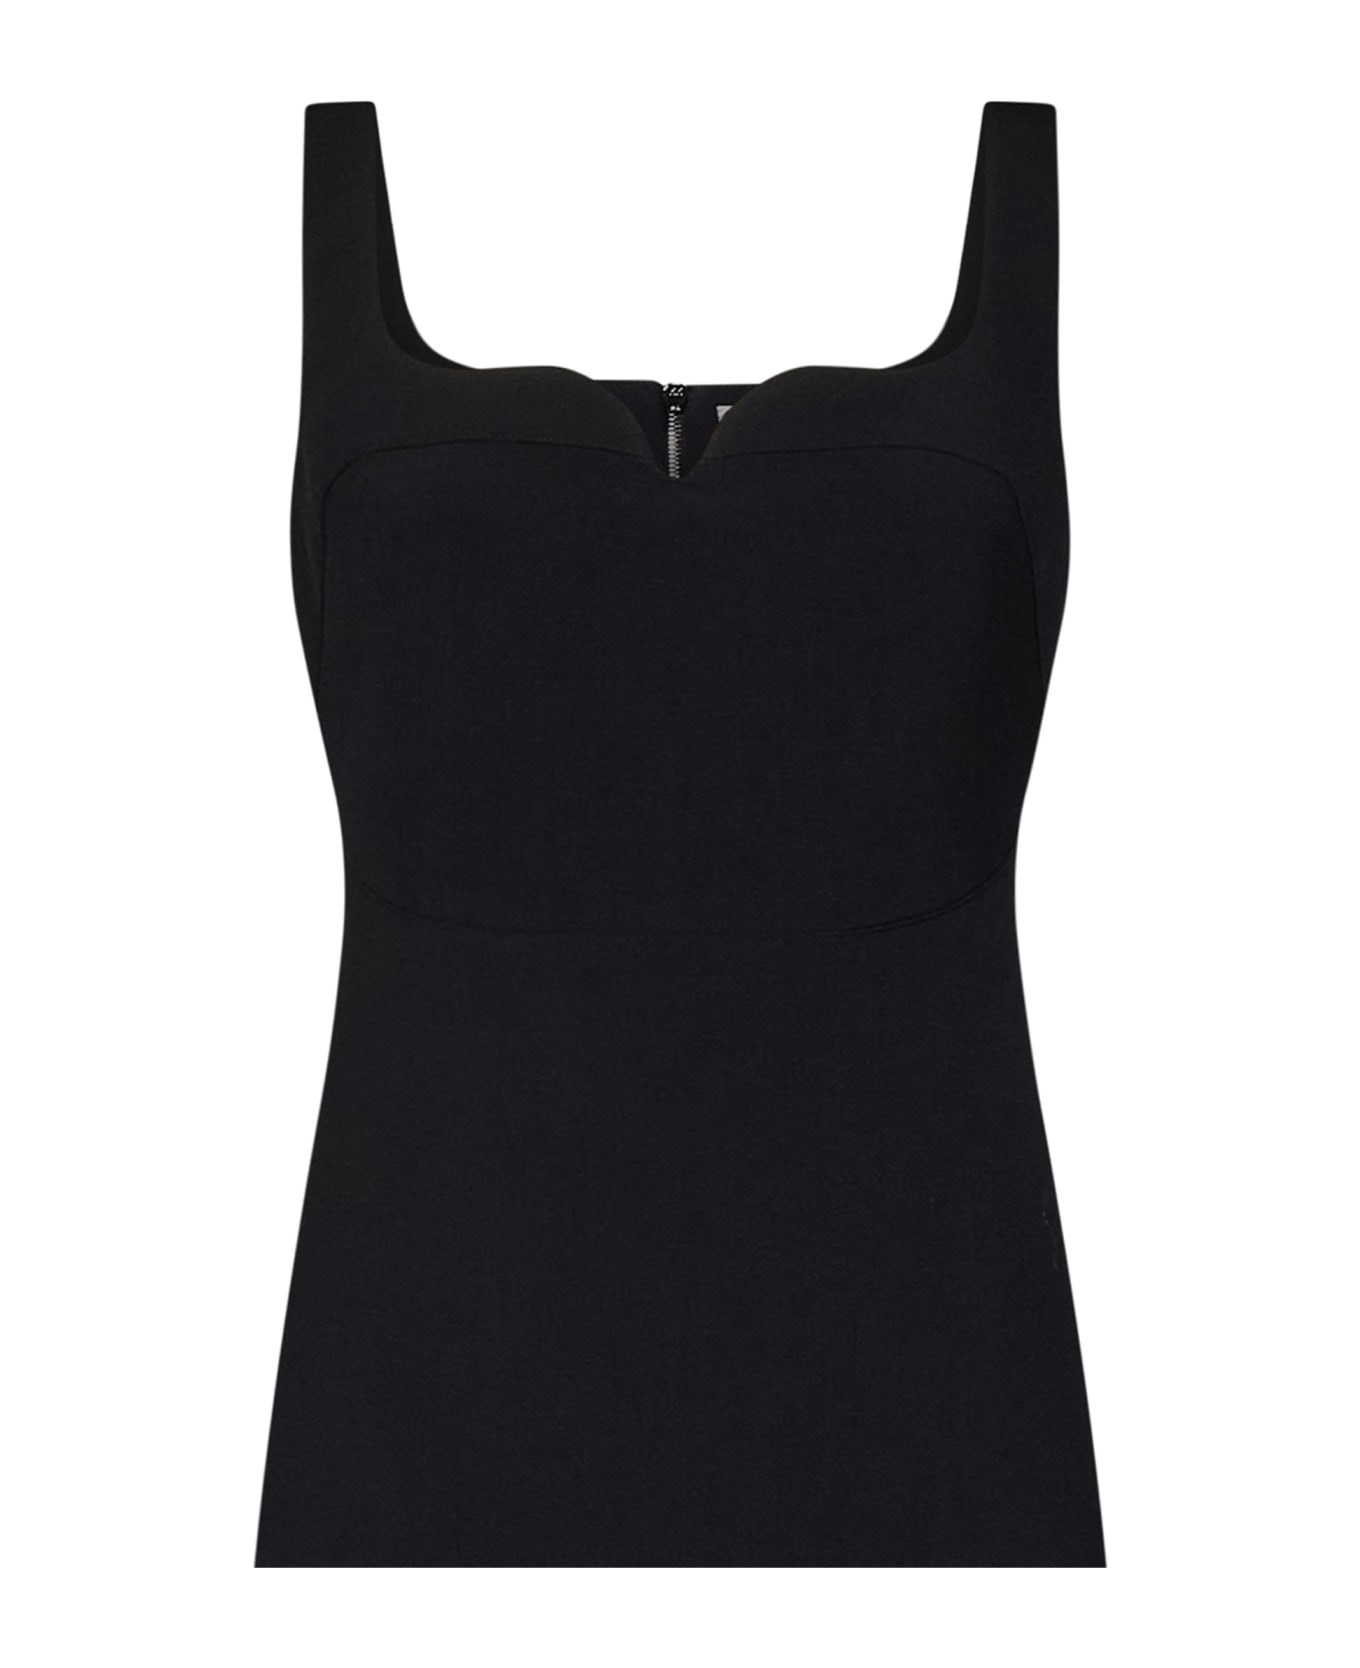 Victoria Beckham Sleeveless Fitted T-shirt Dress Midi Dress - Black